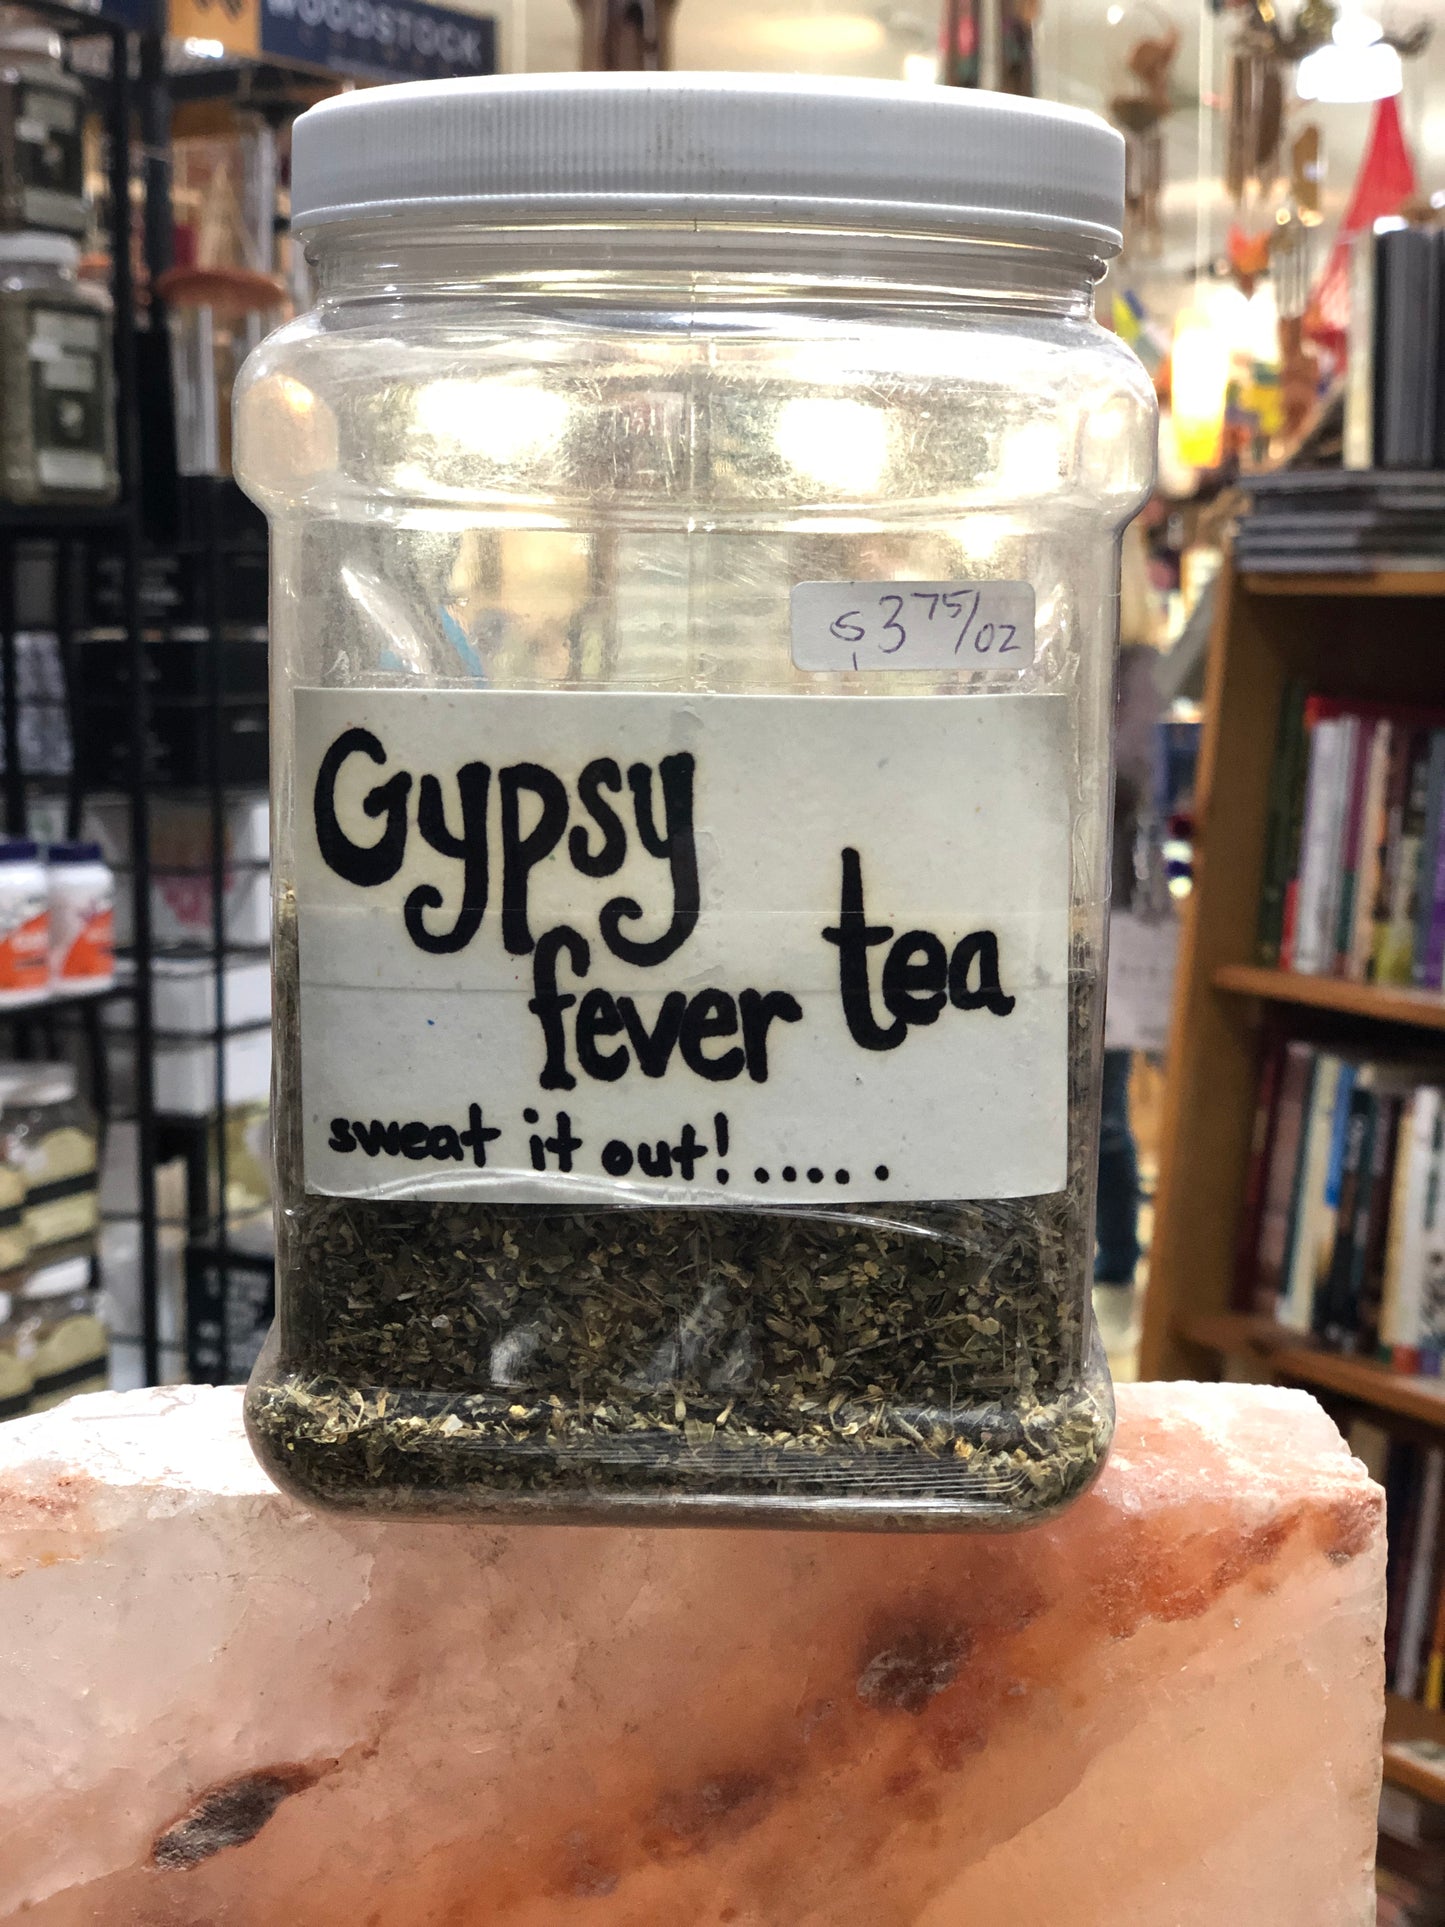 Gypsy Fever Tea